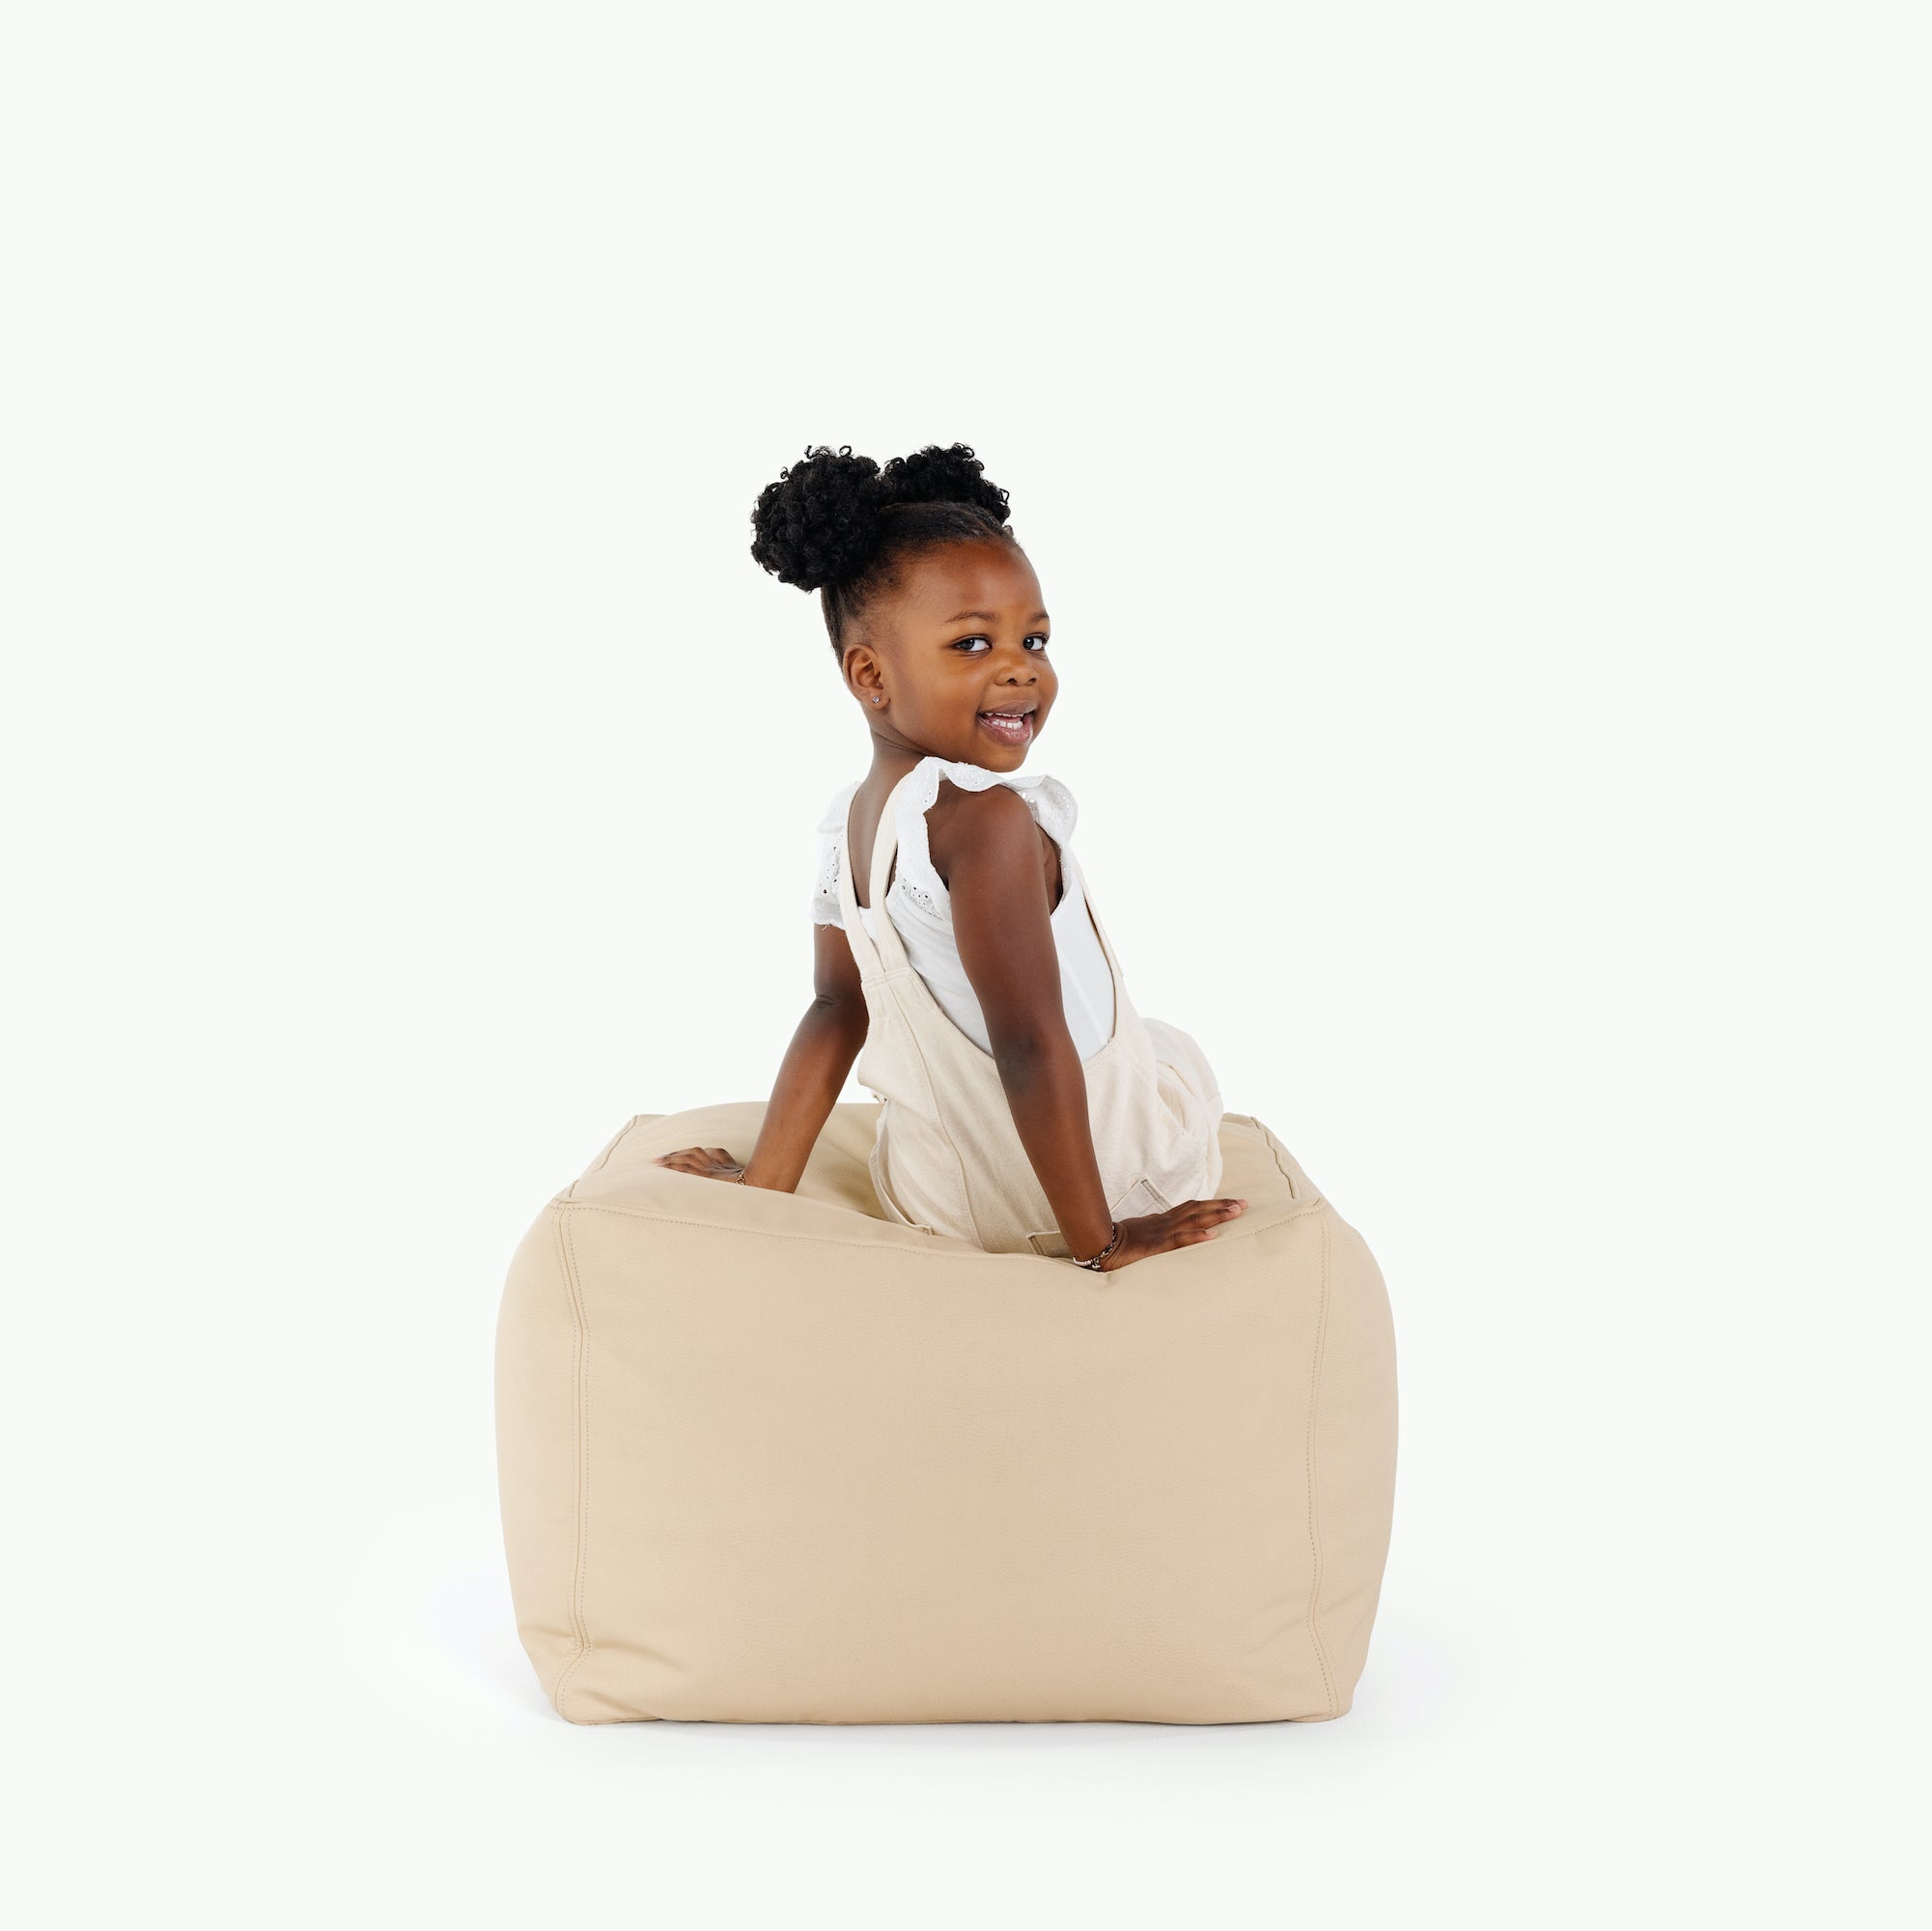 Créme / Square@little girl sitting on pouf